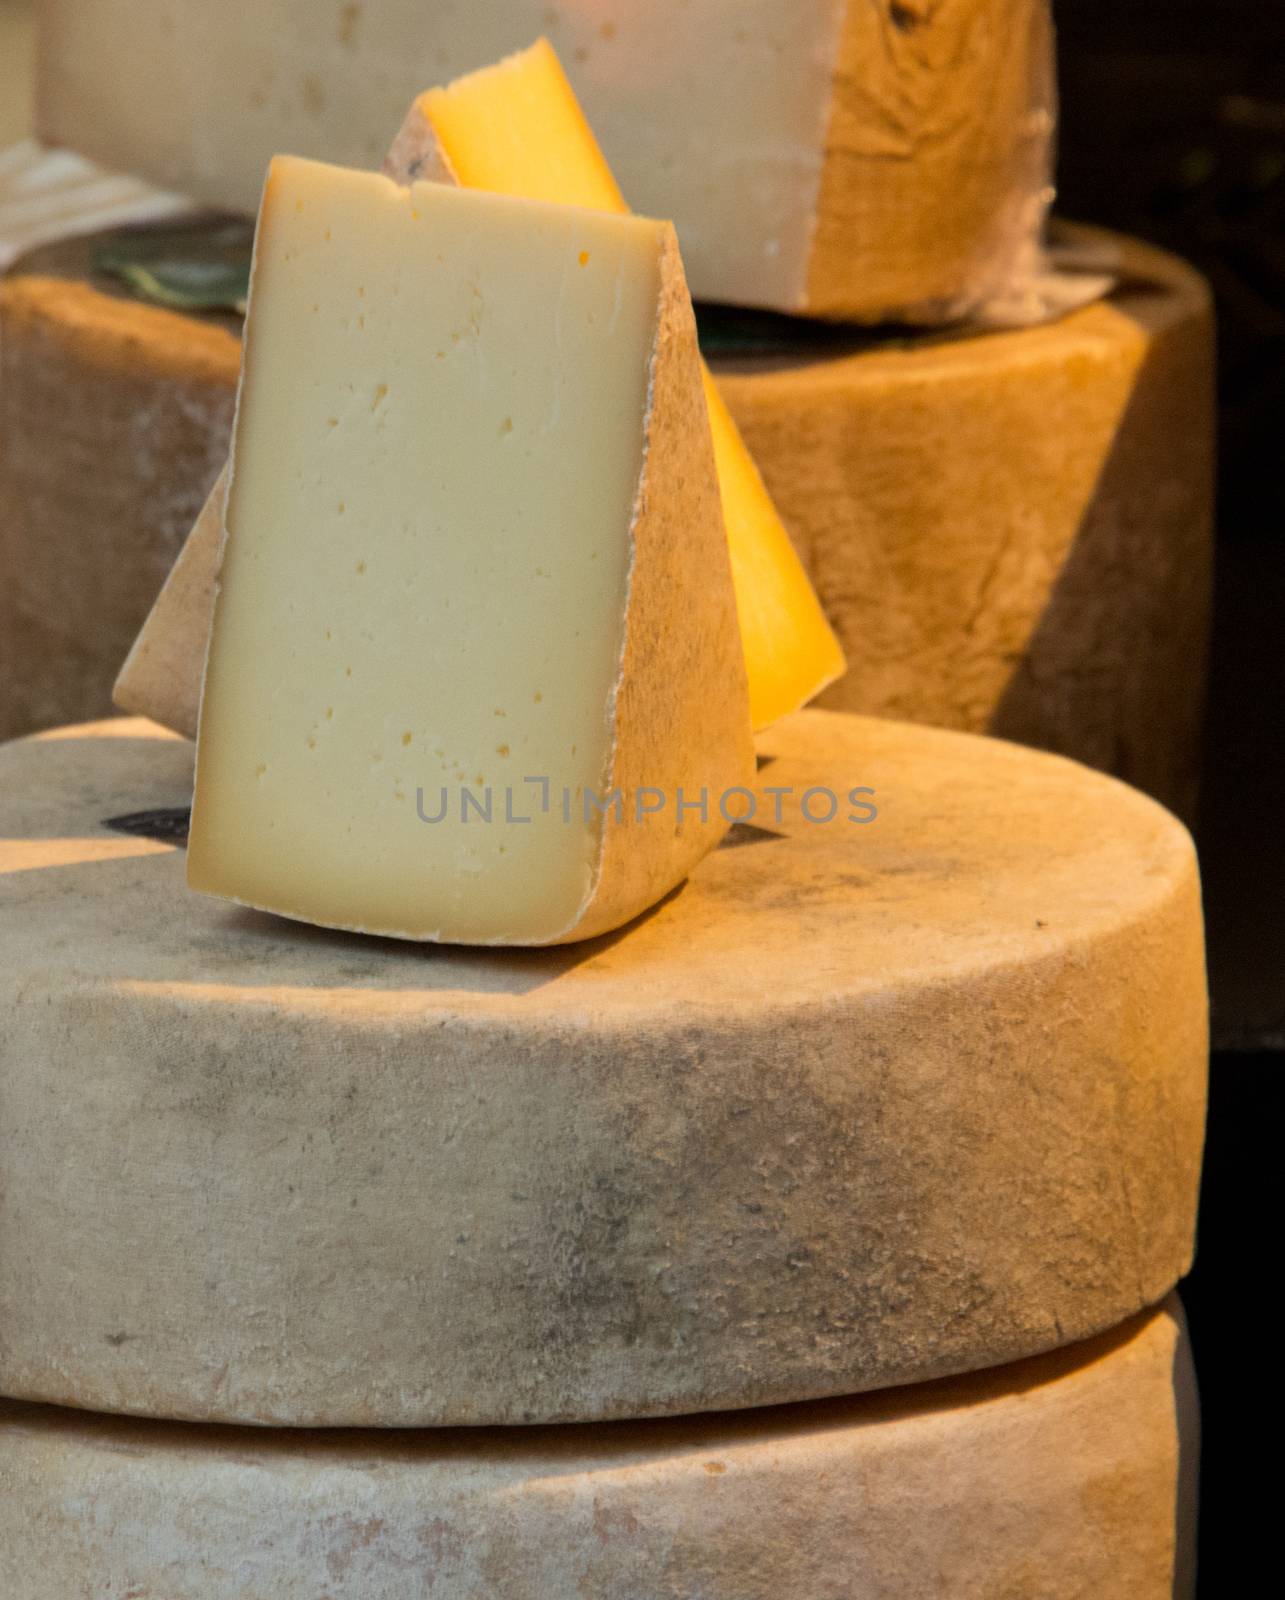 Pastura Cheese by TimAwe